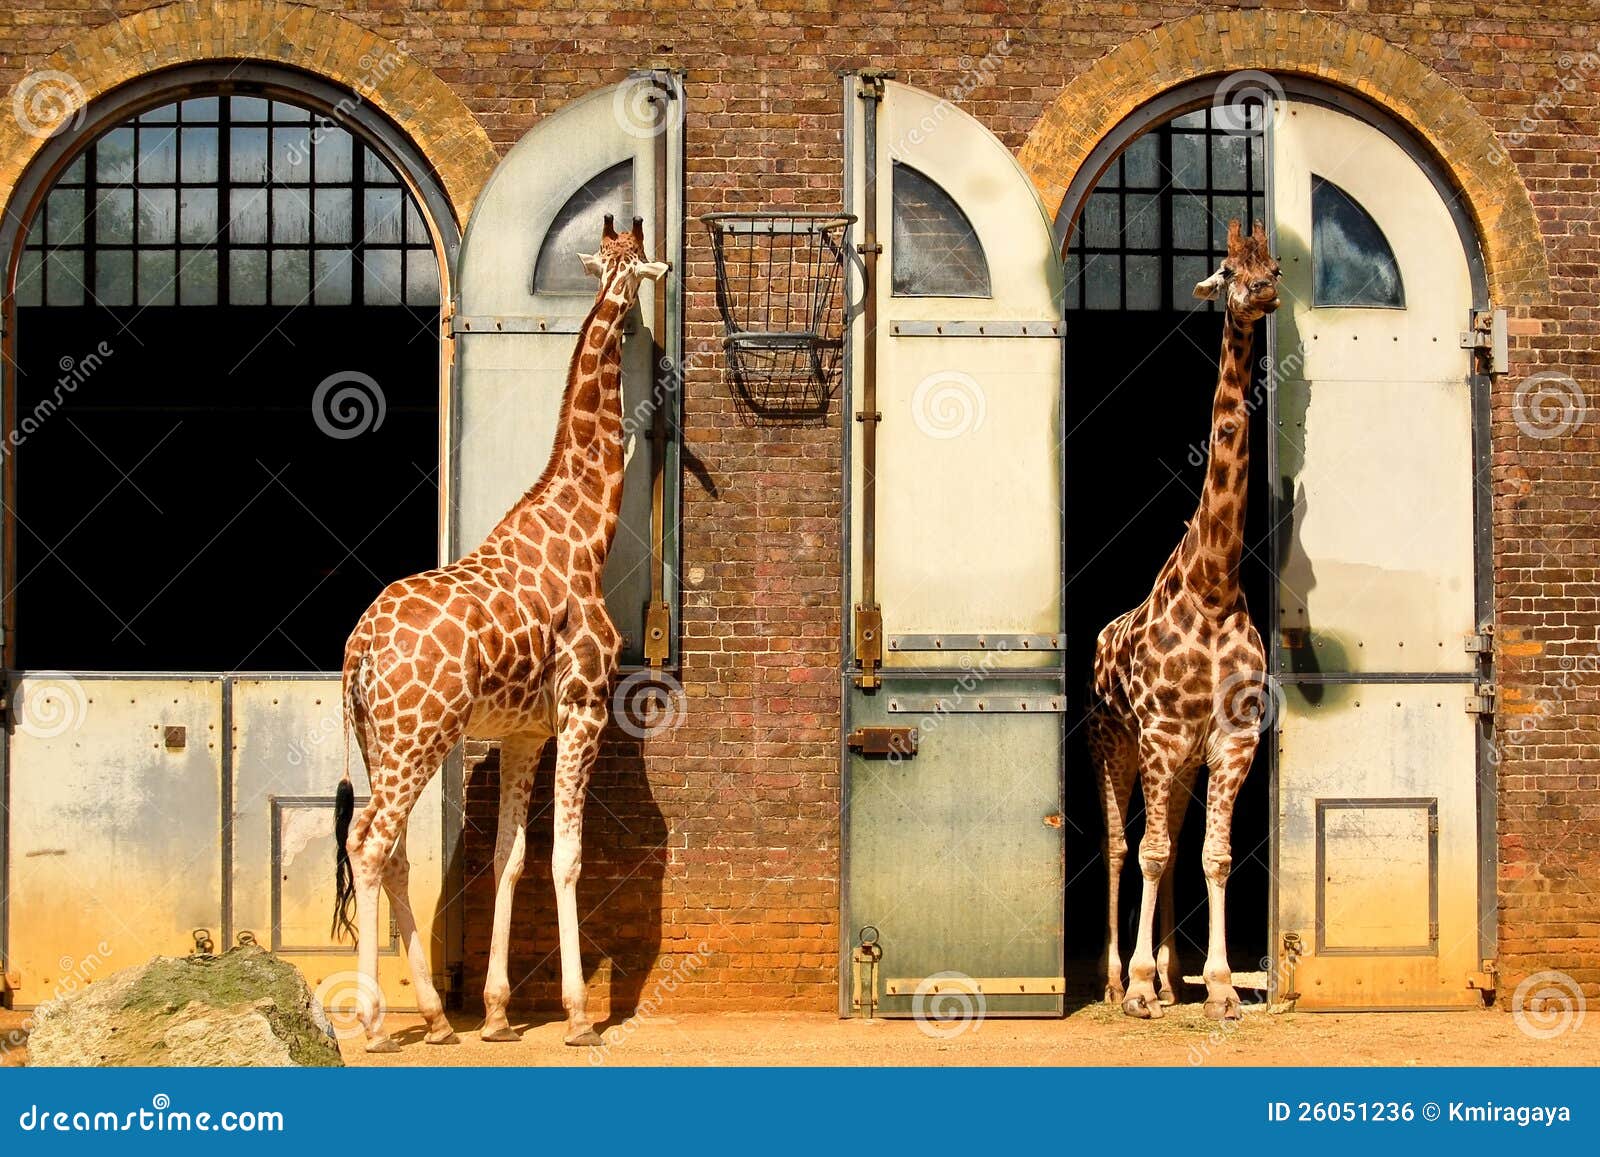 giraffes at the london zoo